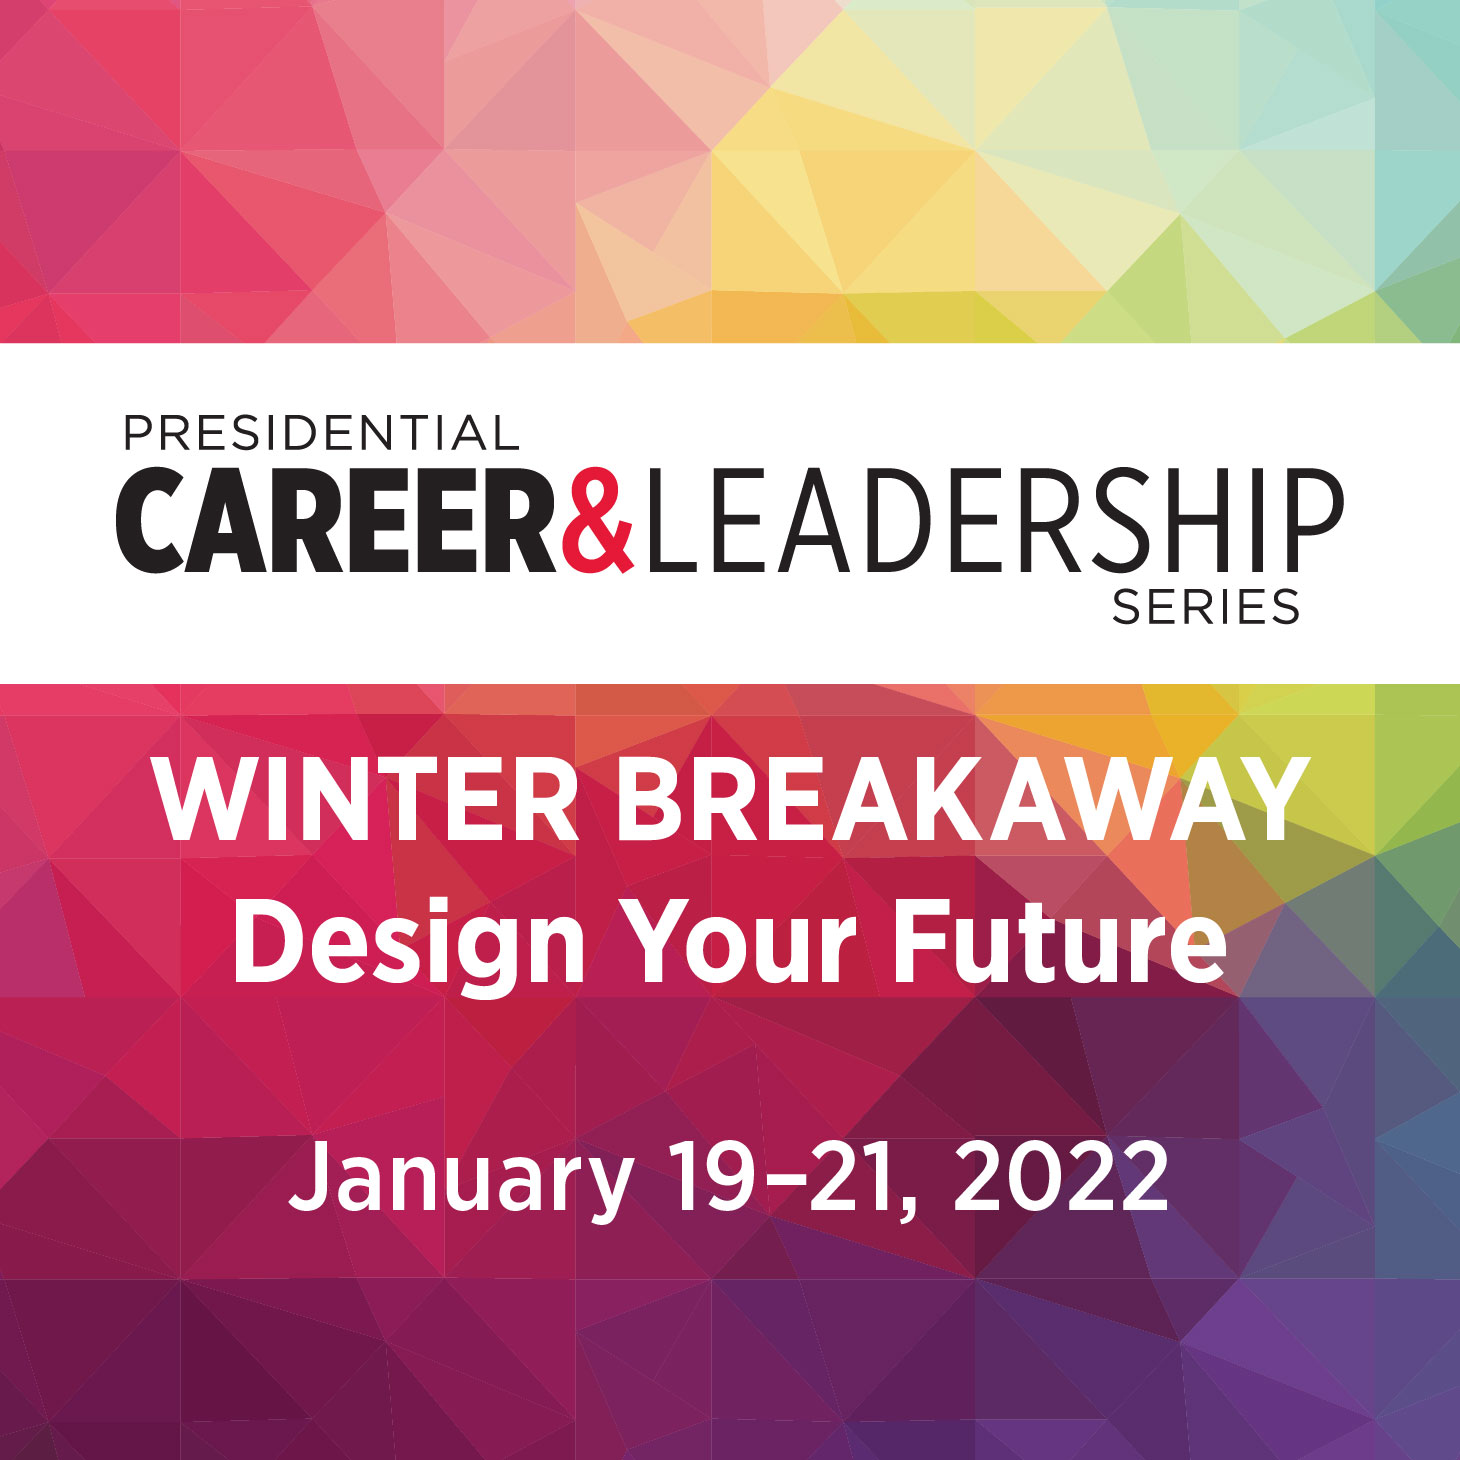  Presidential Leadership & Career Series Winter Breakaway: Design Your Future on January 19–21